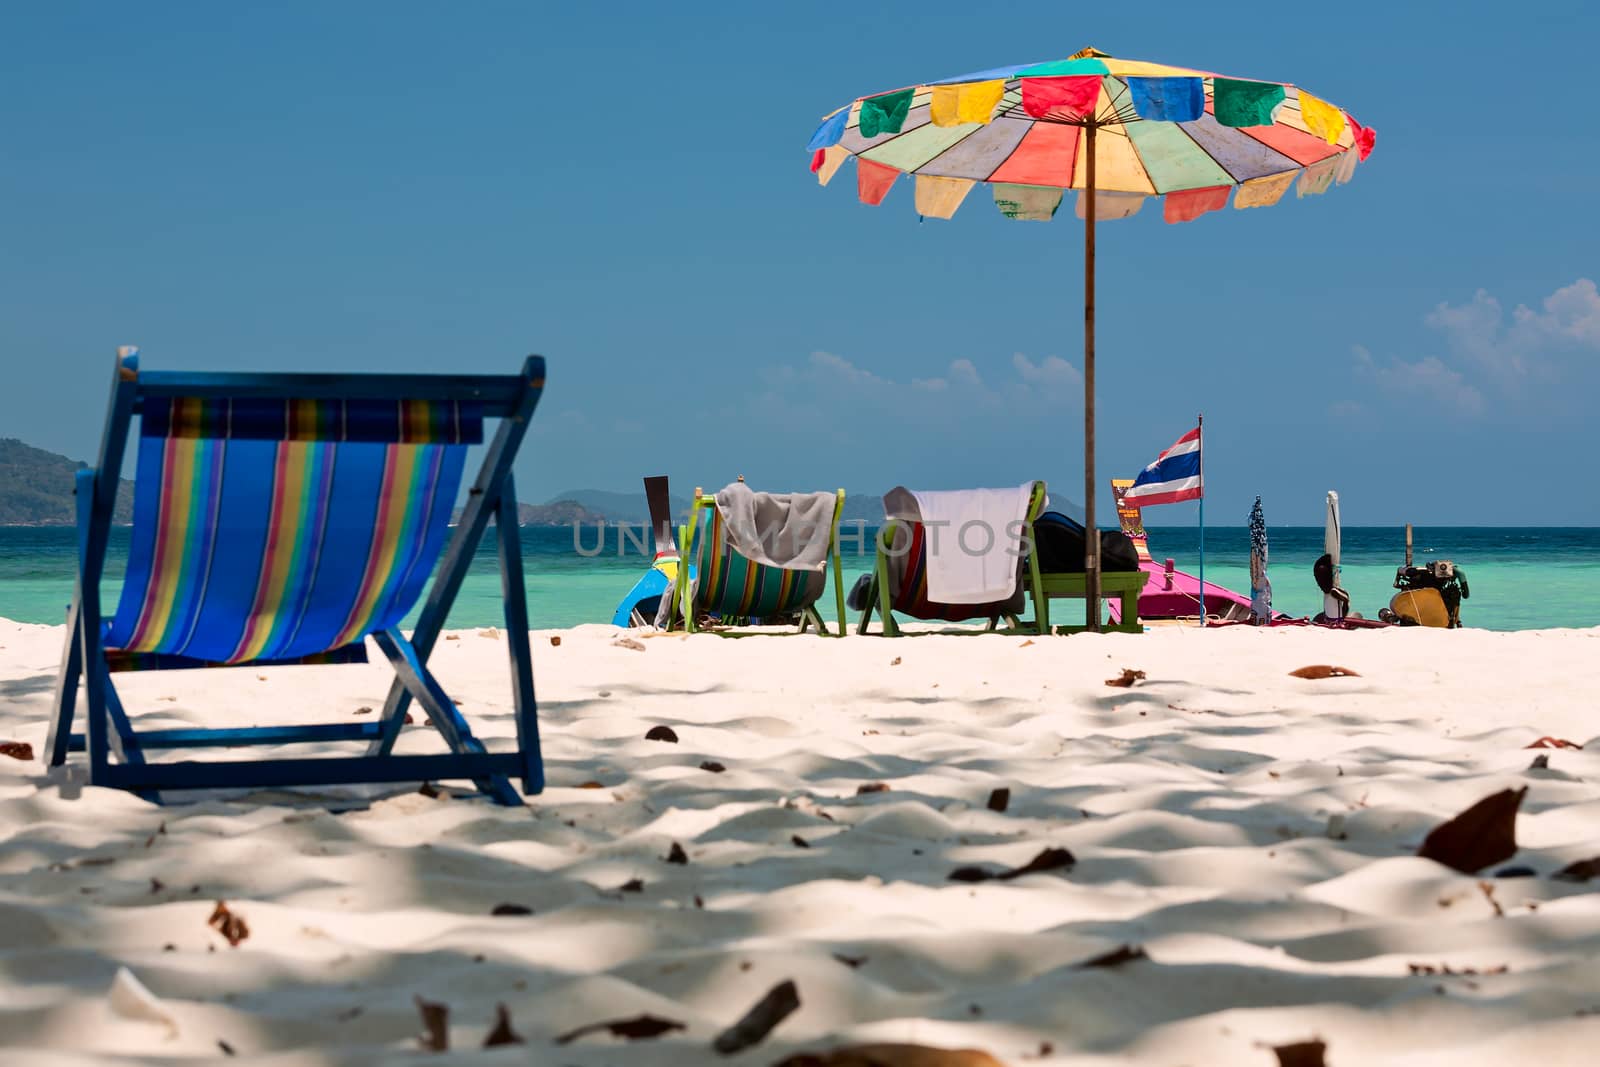 Beach umbrella and chairs in Komodo beach in Coral island, Thail by LuigiMorbidelli